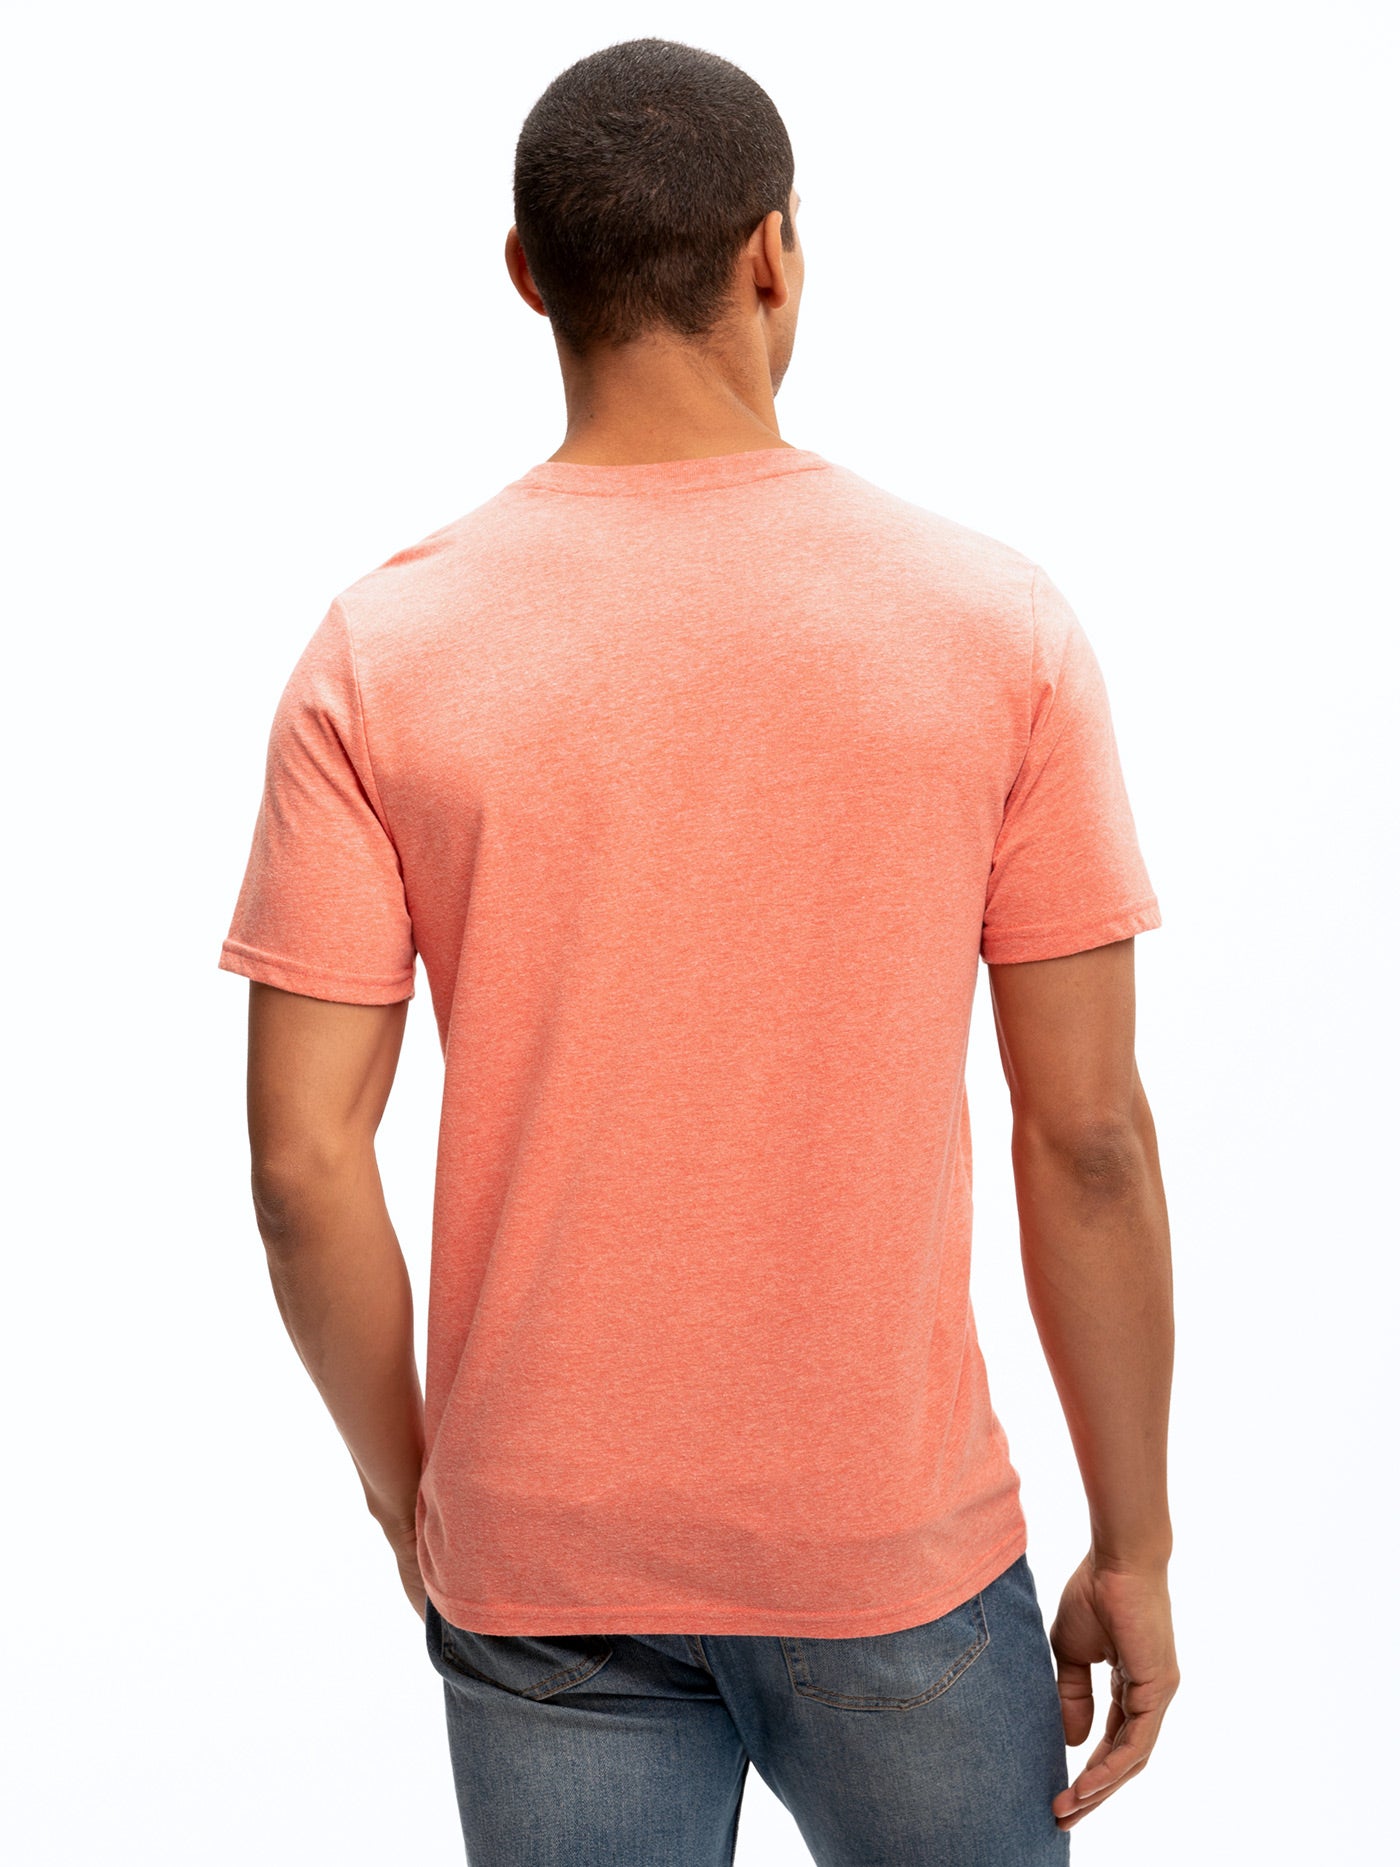 Triblend Short Sleeve V-Neck Mens Tops Tshirt Short Threads 4 Thought 